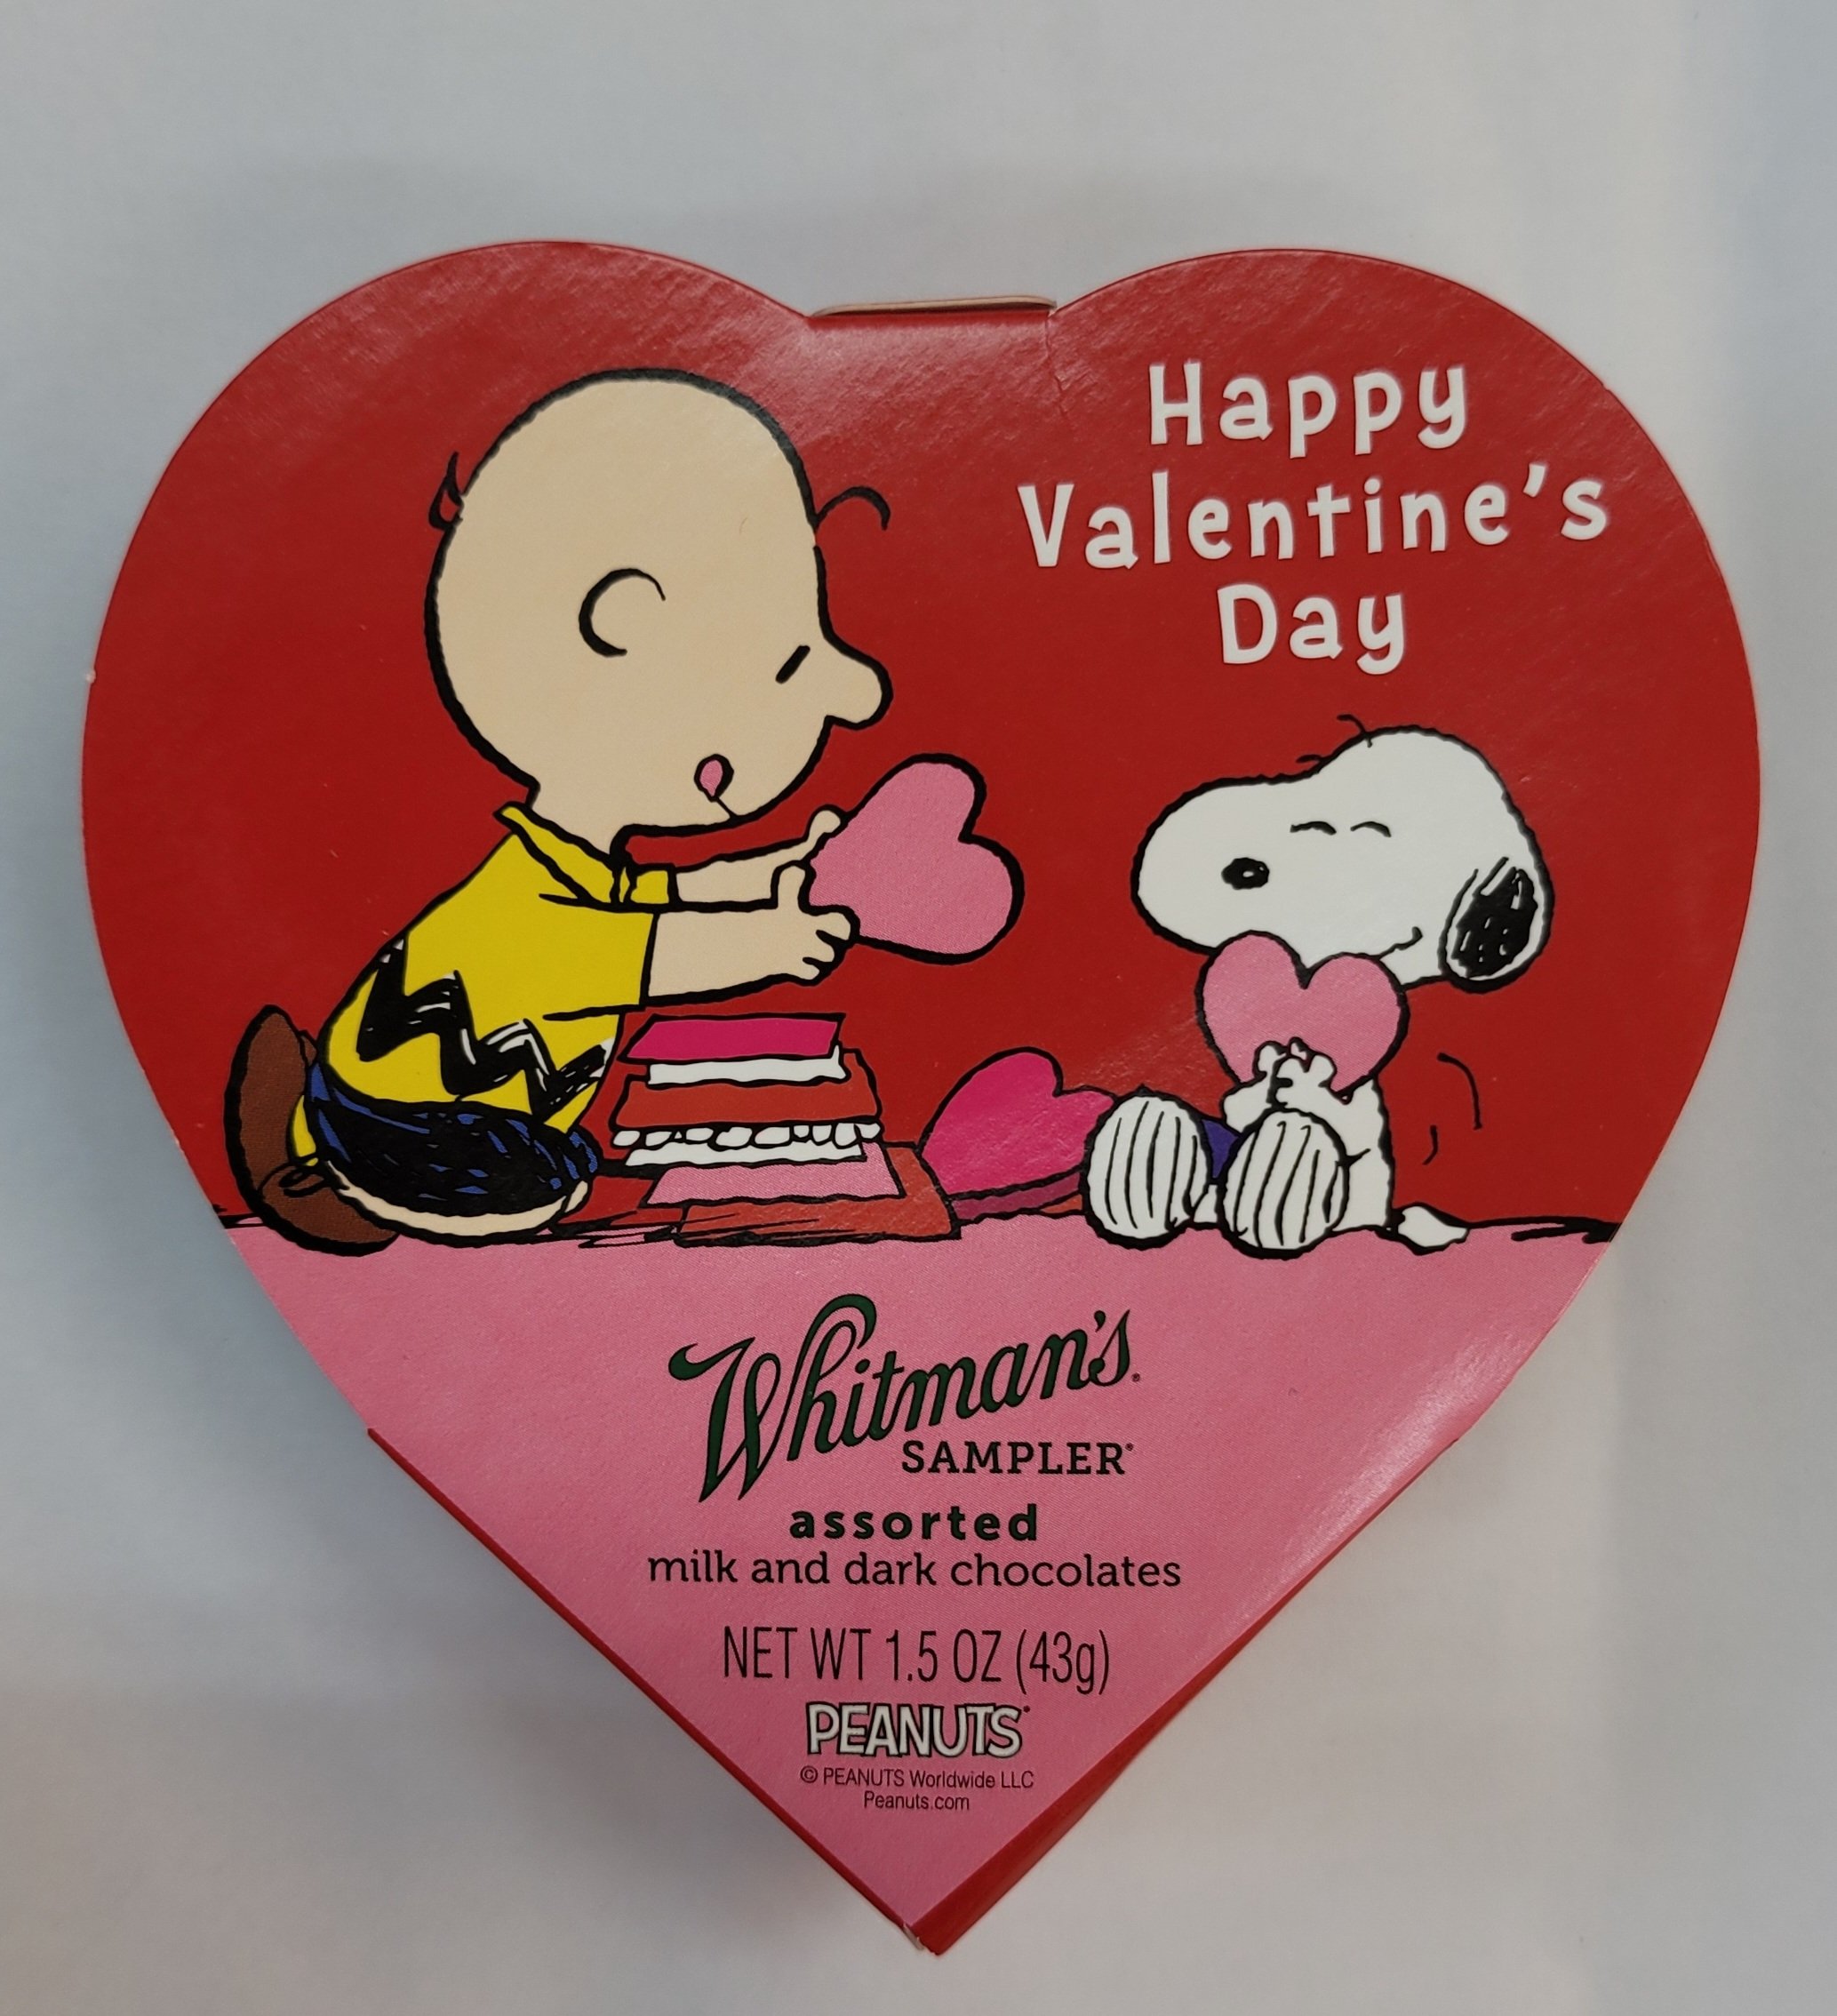 chocolate Valentine's day (43g)